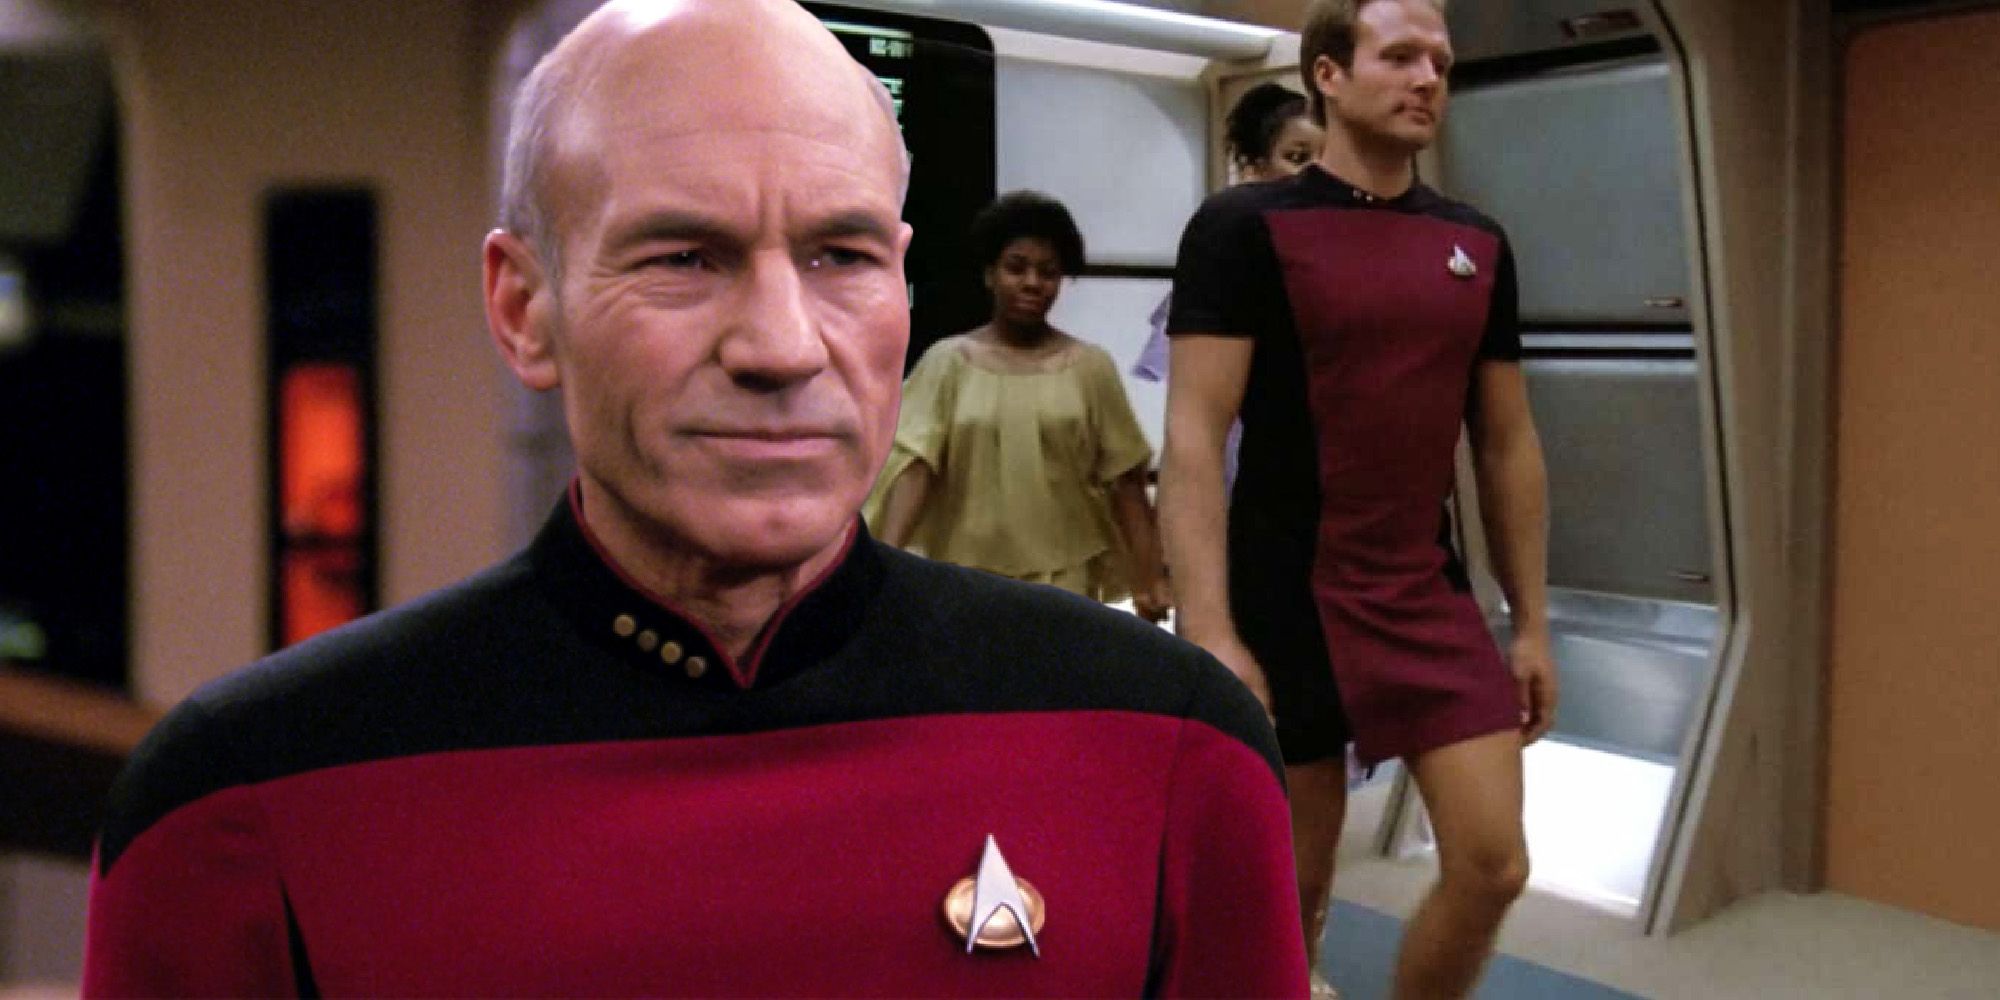 Picard star trek the next generation skant uniform